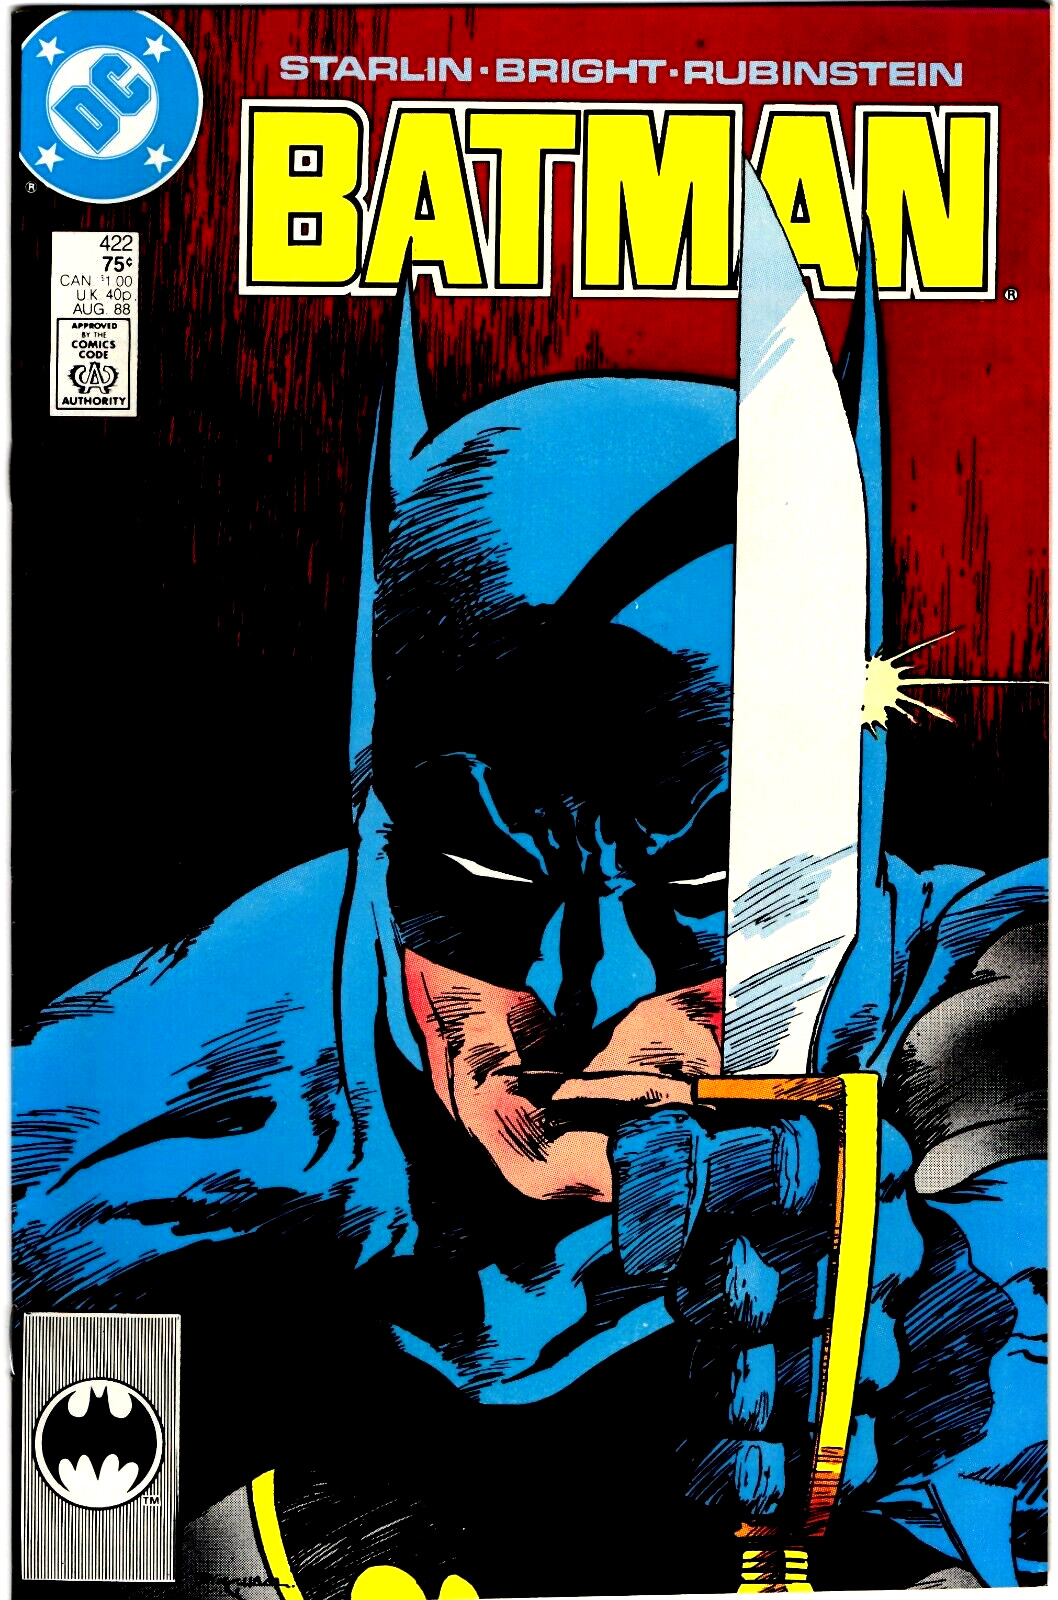 🔥 Batman #422 DC Comics (1988) - Jim Starlin Story & Jerry Bingham Cover Art 🔥